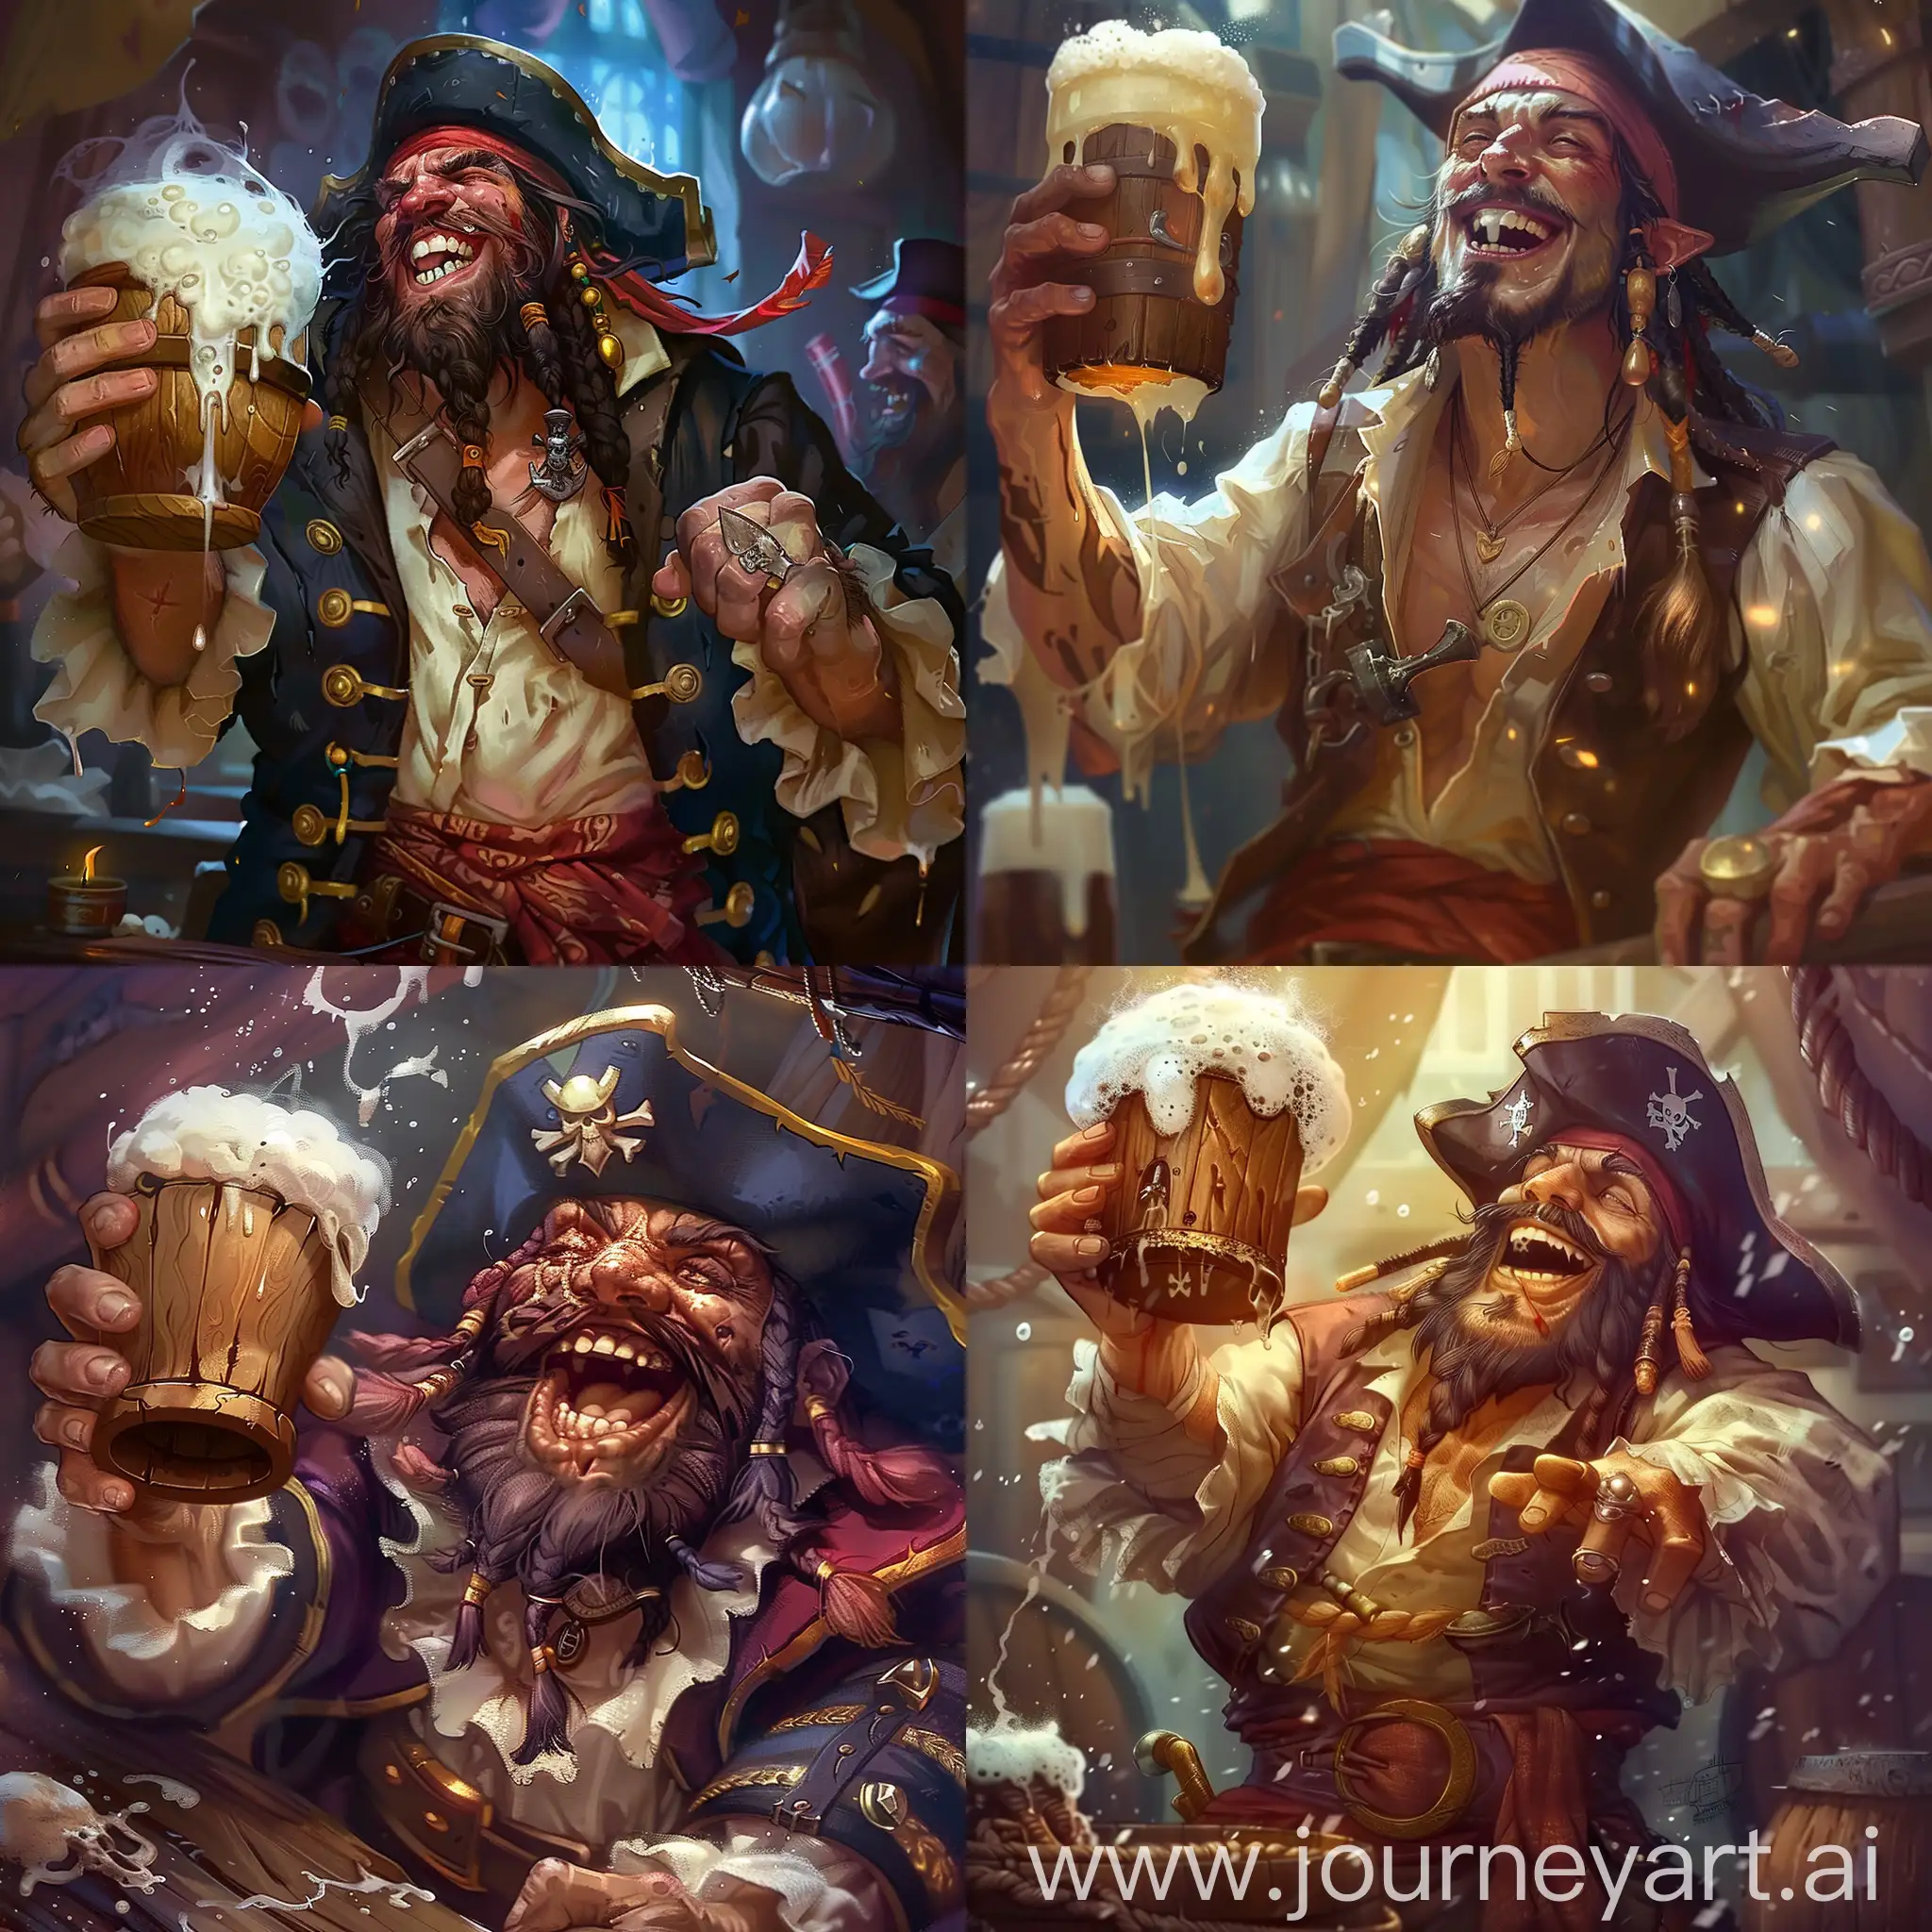 Cheerful-Pirate-Enjoying-Foamy-Beer-in-a-Fantasy-Tavern